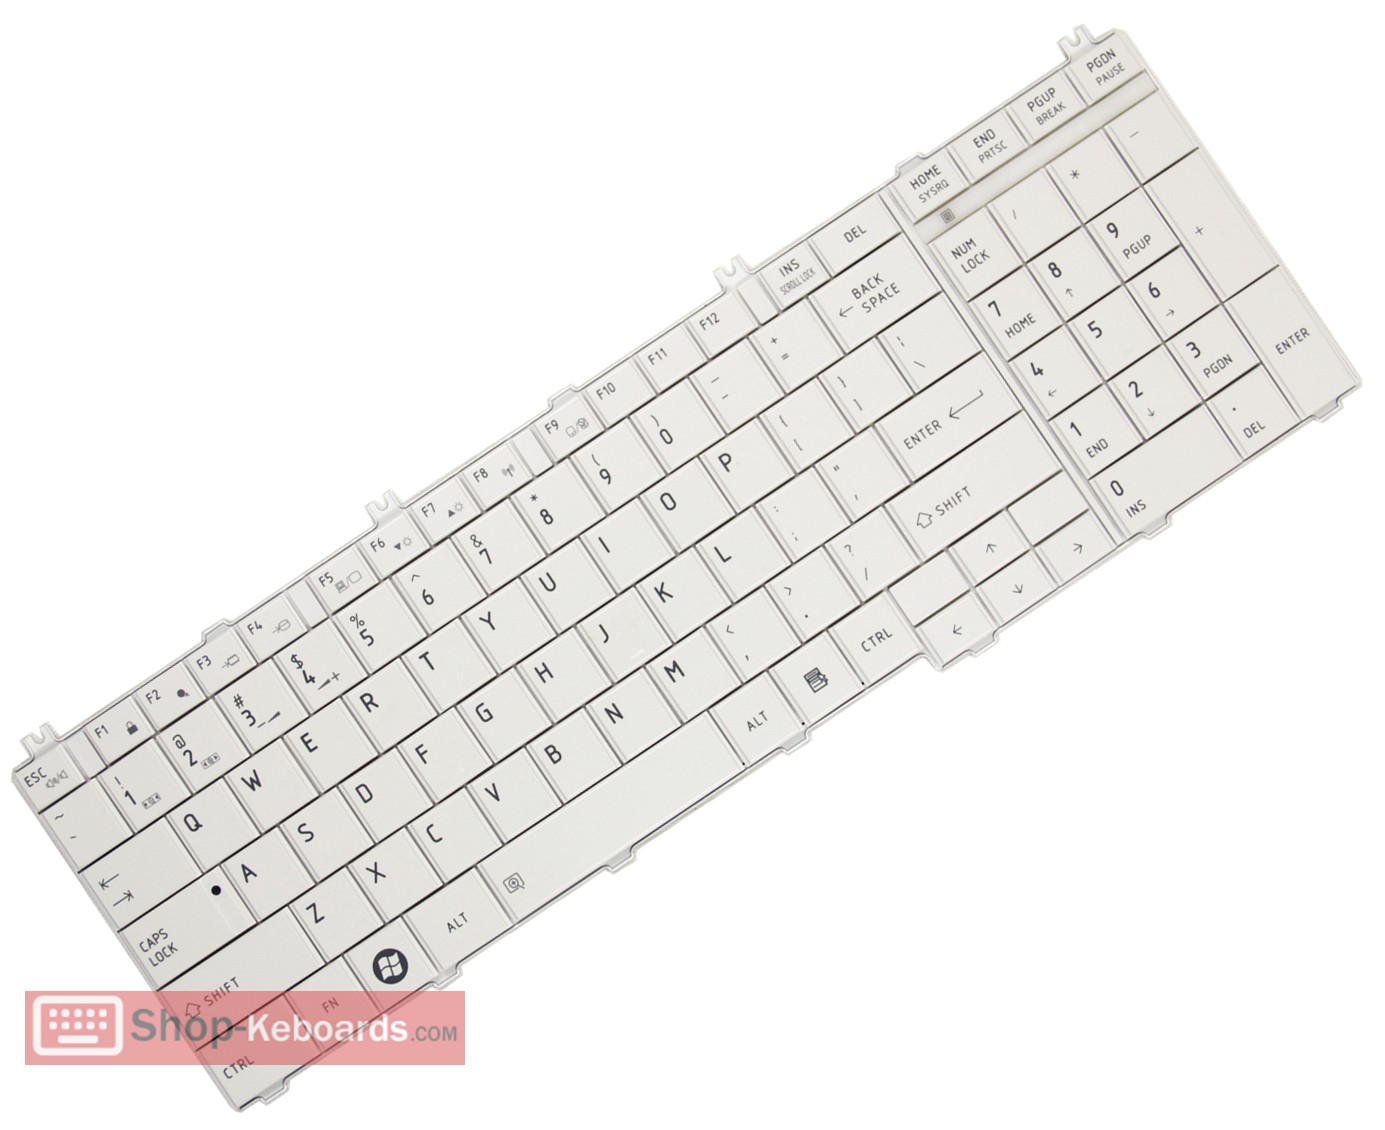 Toshiba Satellite C655D Series  Keyboard replacement